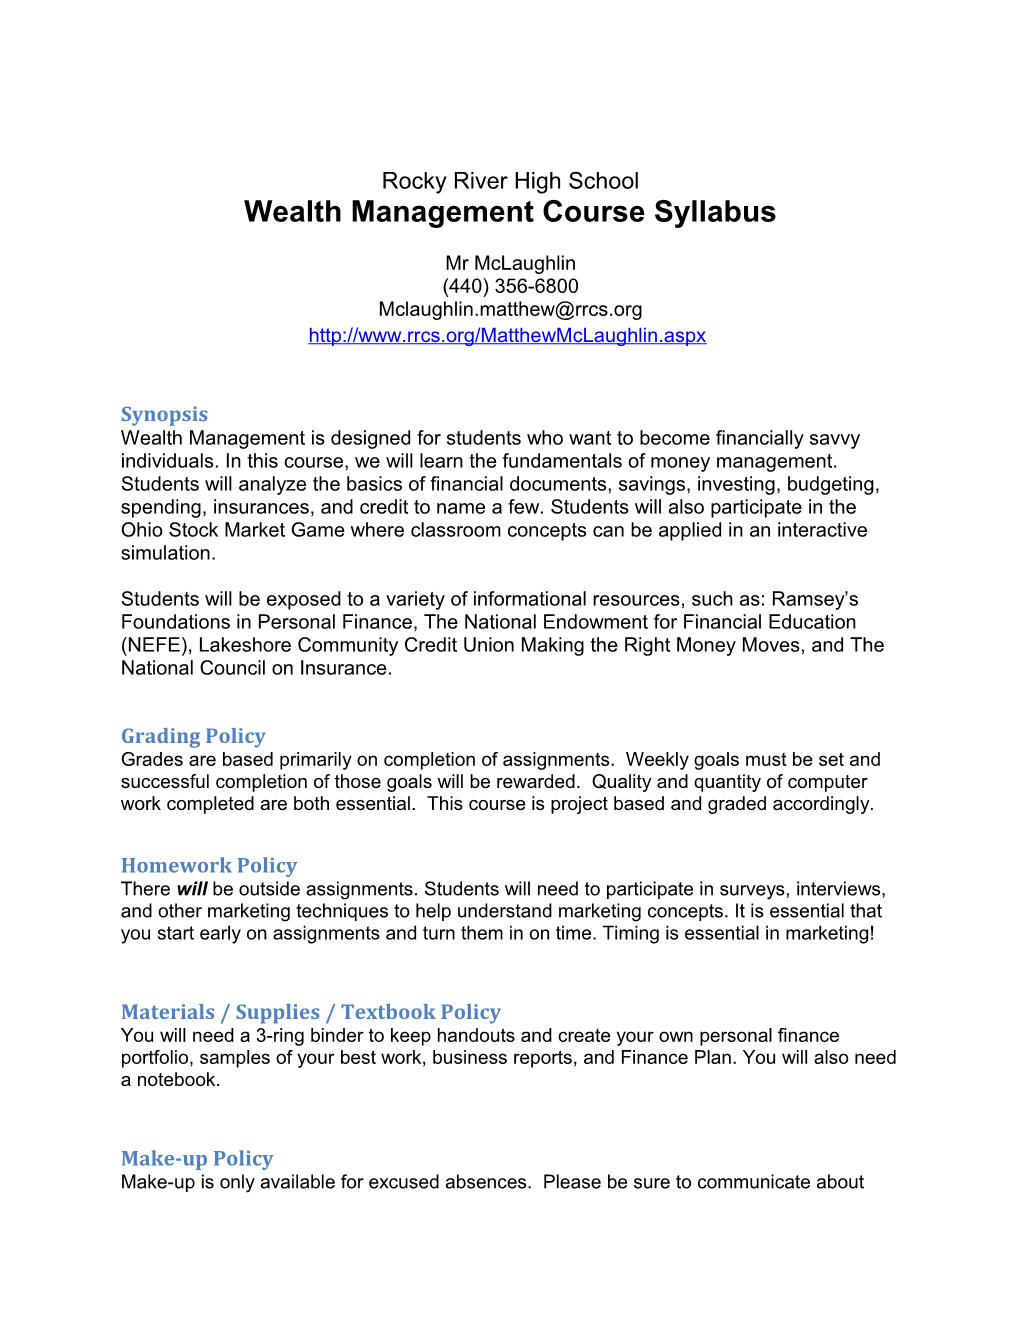 Wealth Management Course Syllabus